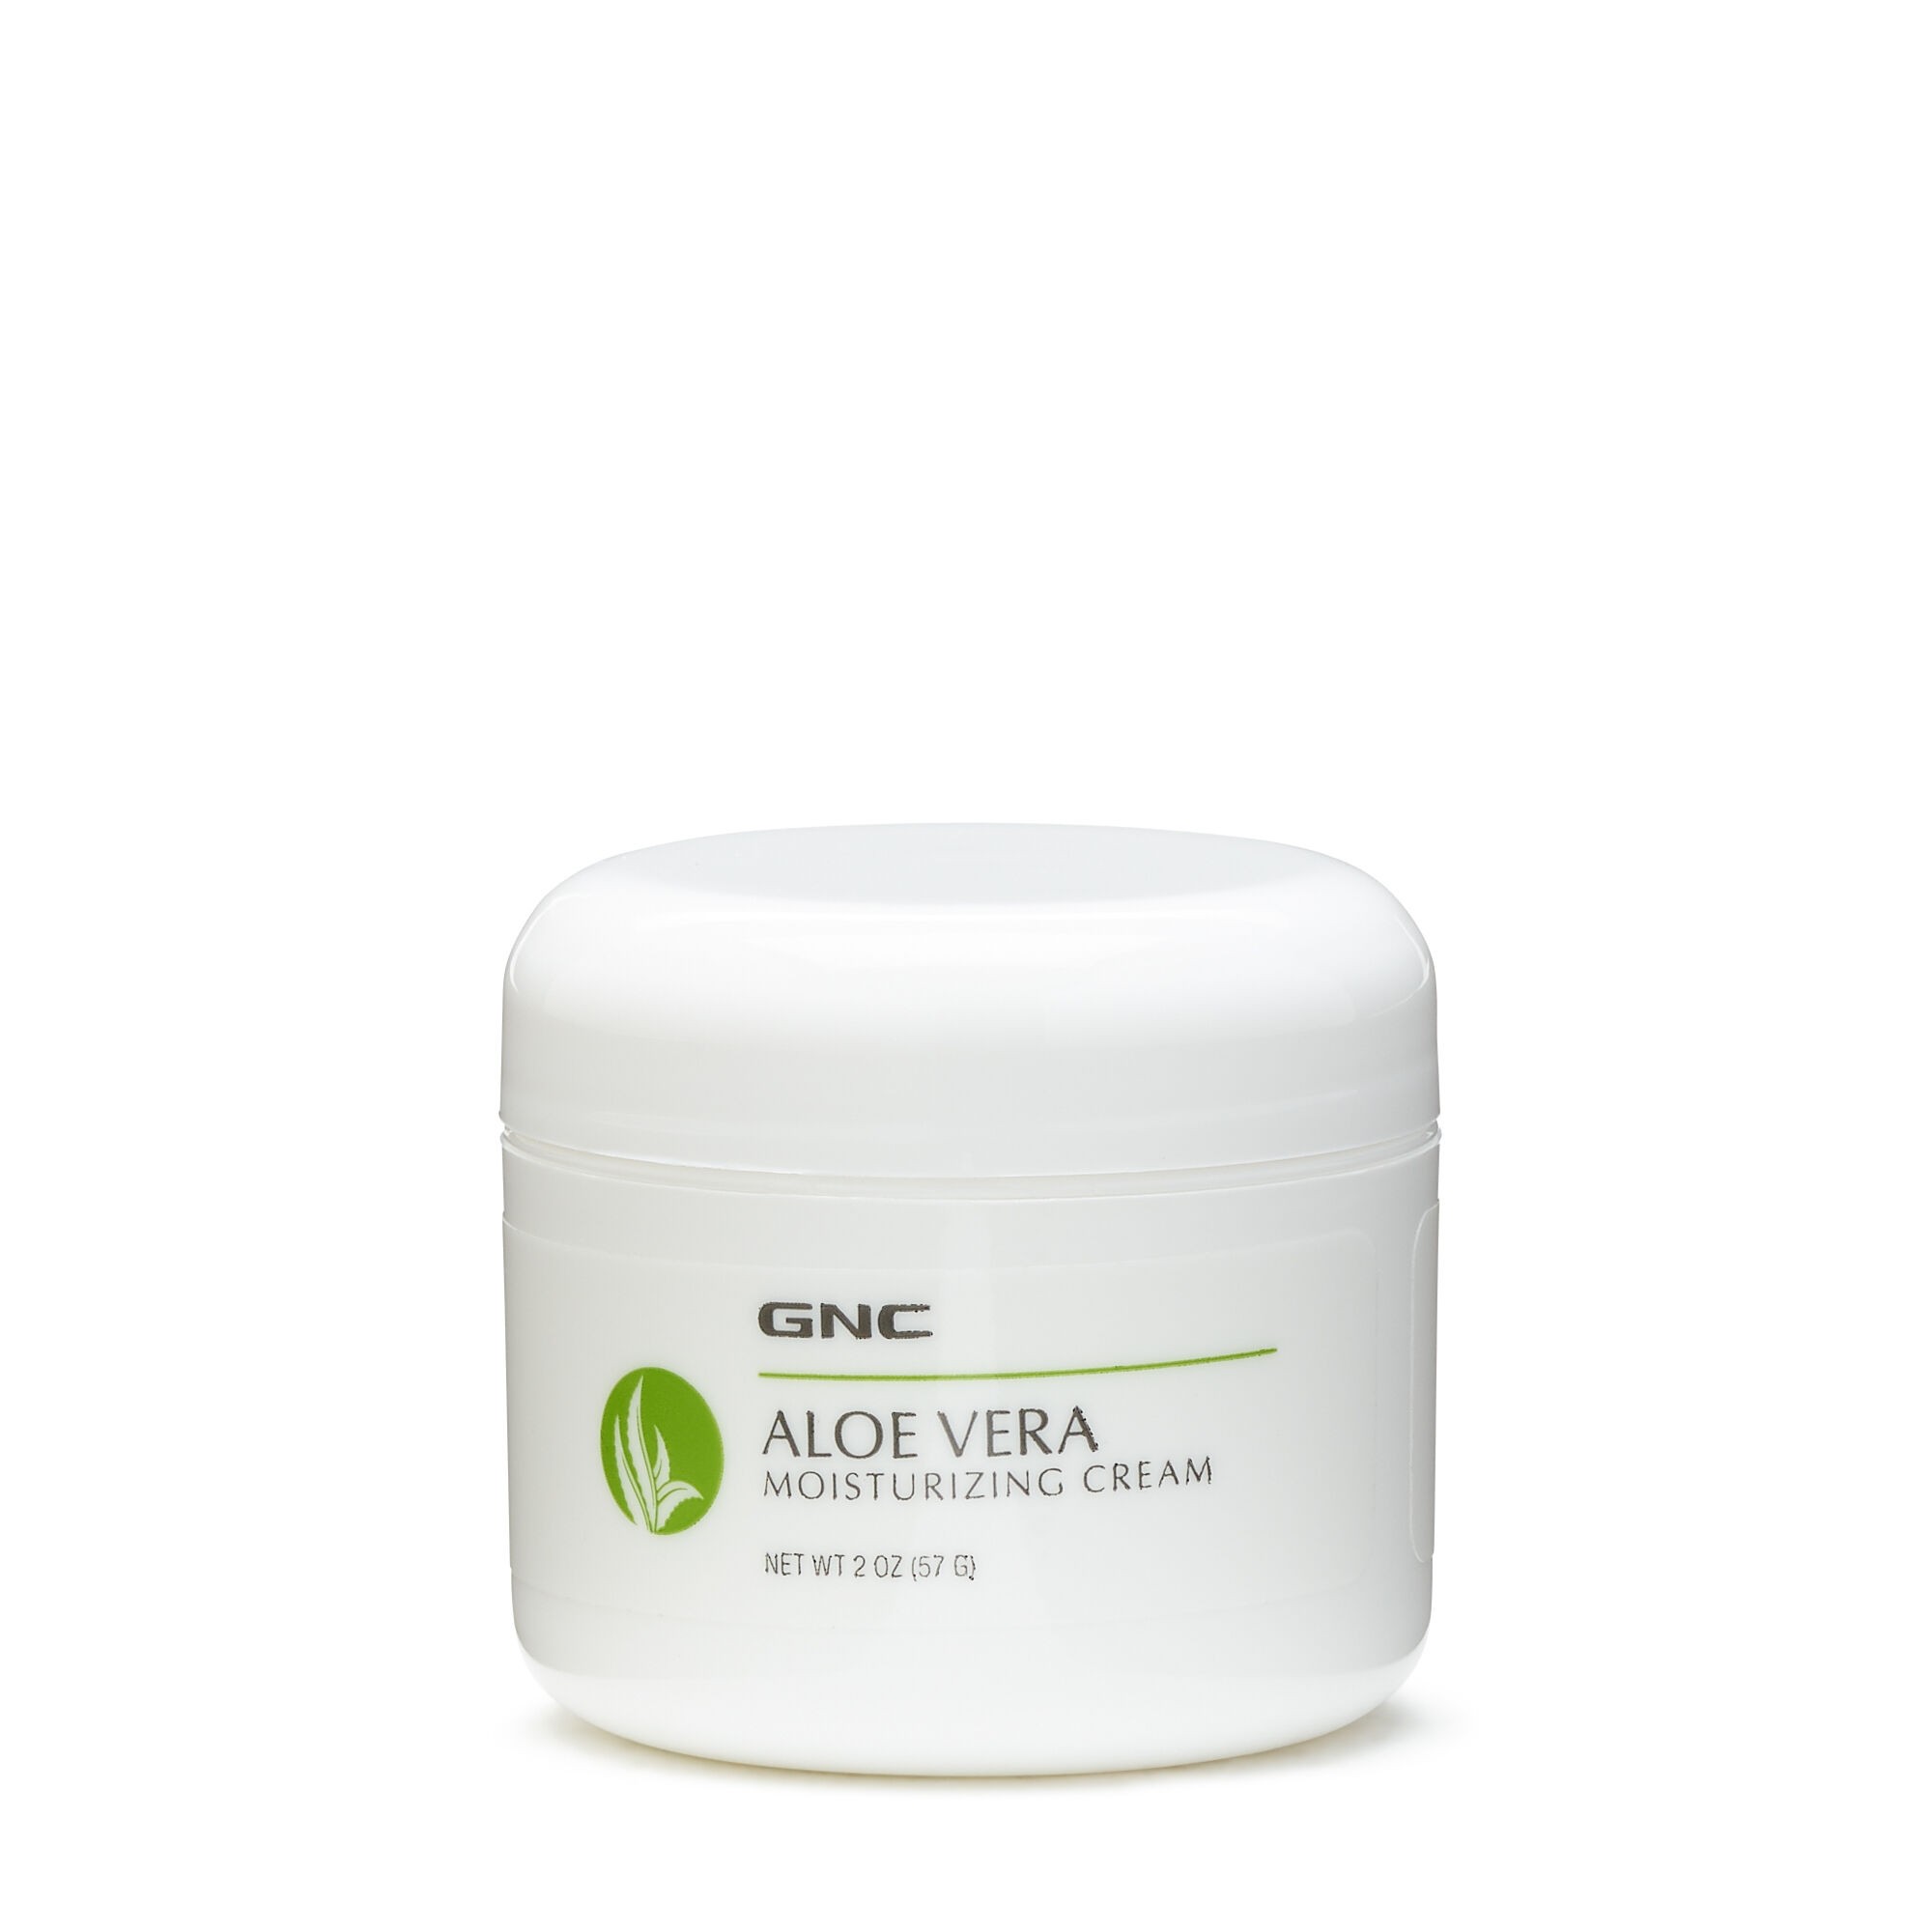 Îngrijirea mâinilor - Aloe Vera Moisturizing Cream, Crema Hidratanta cu Aloe Vera , 57 g, GNC, farmaciamare.ro